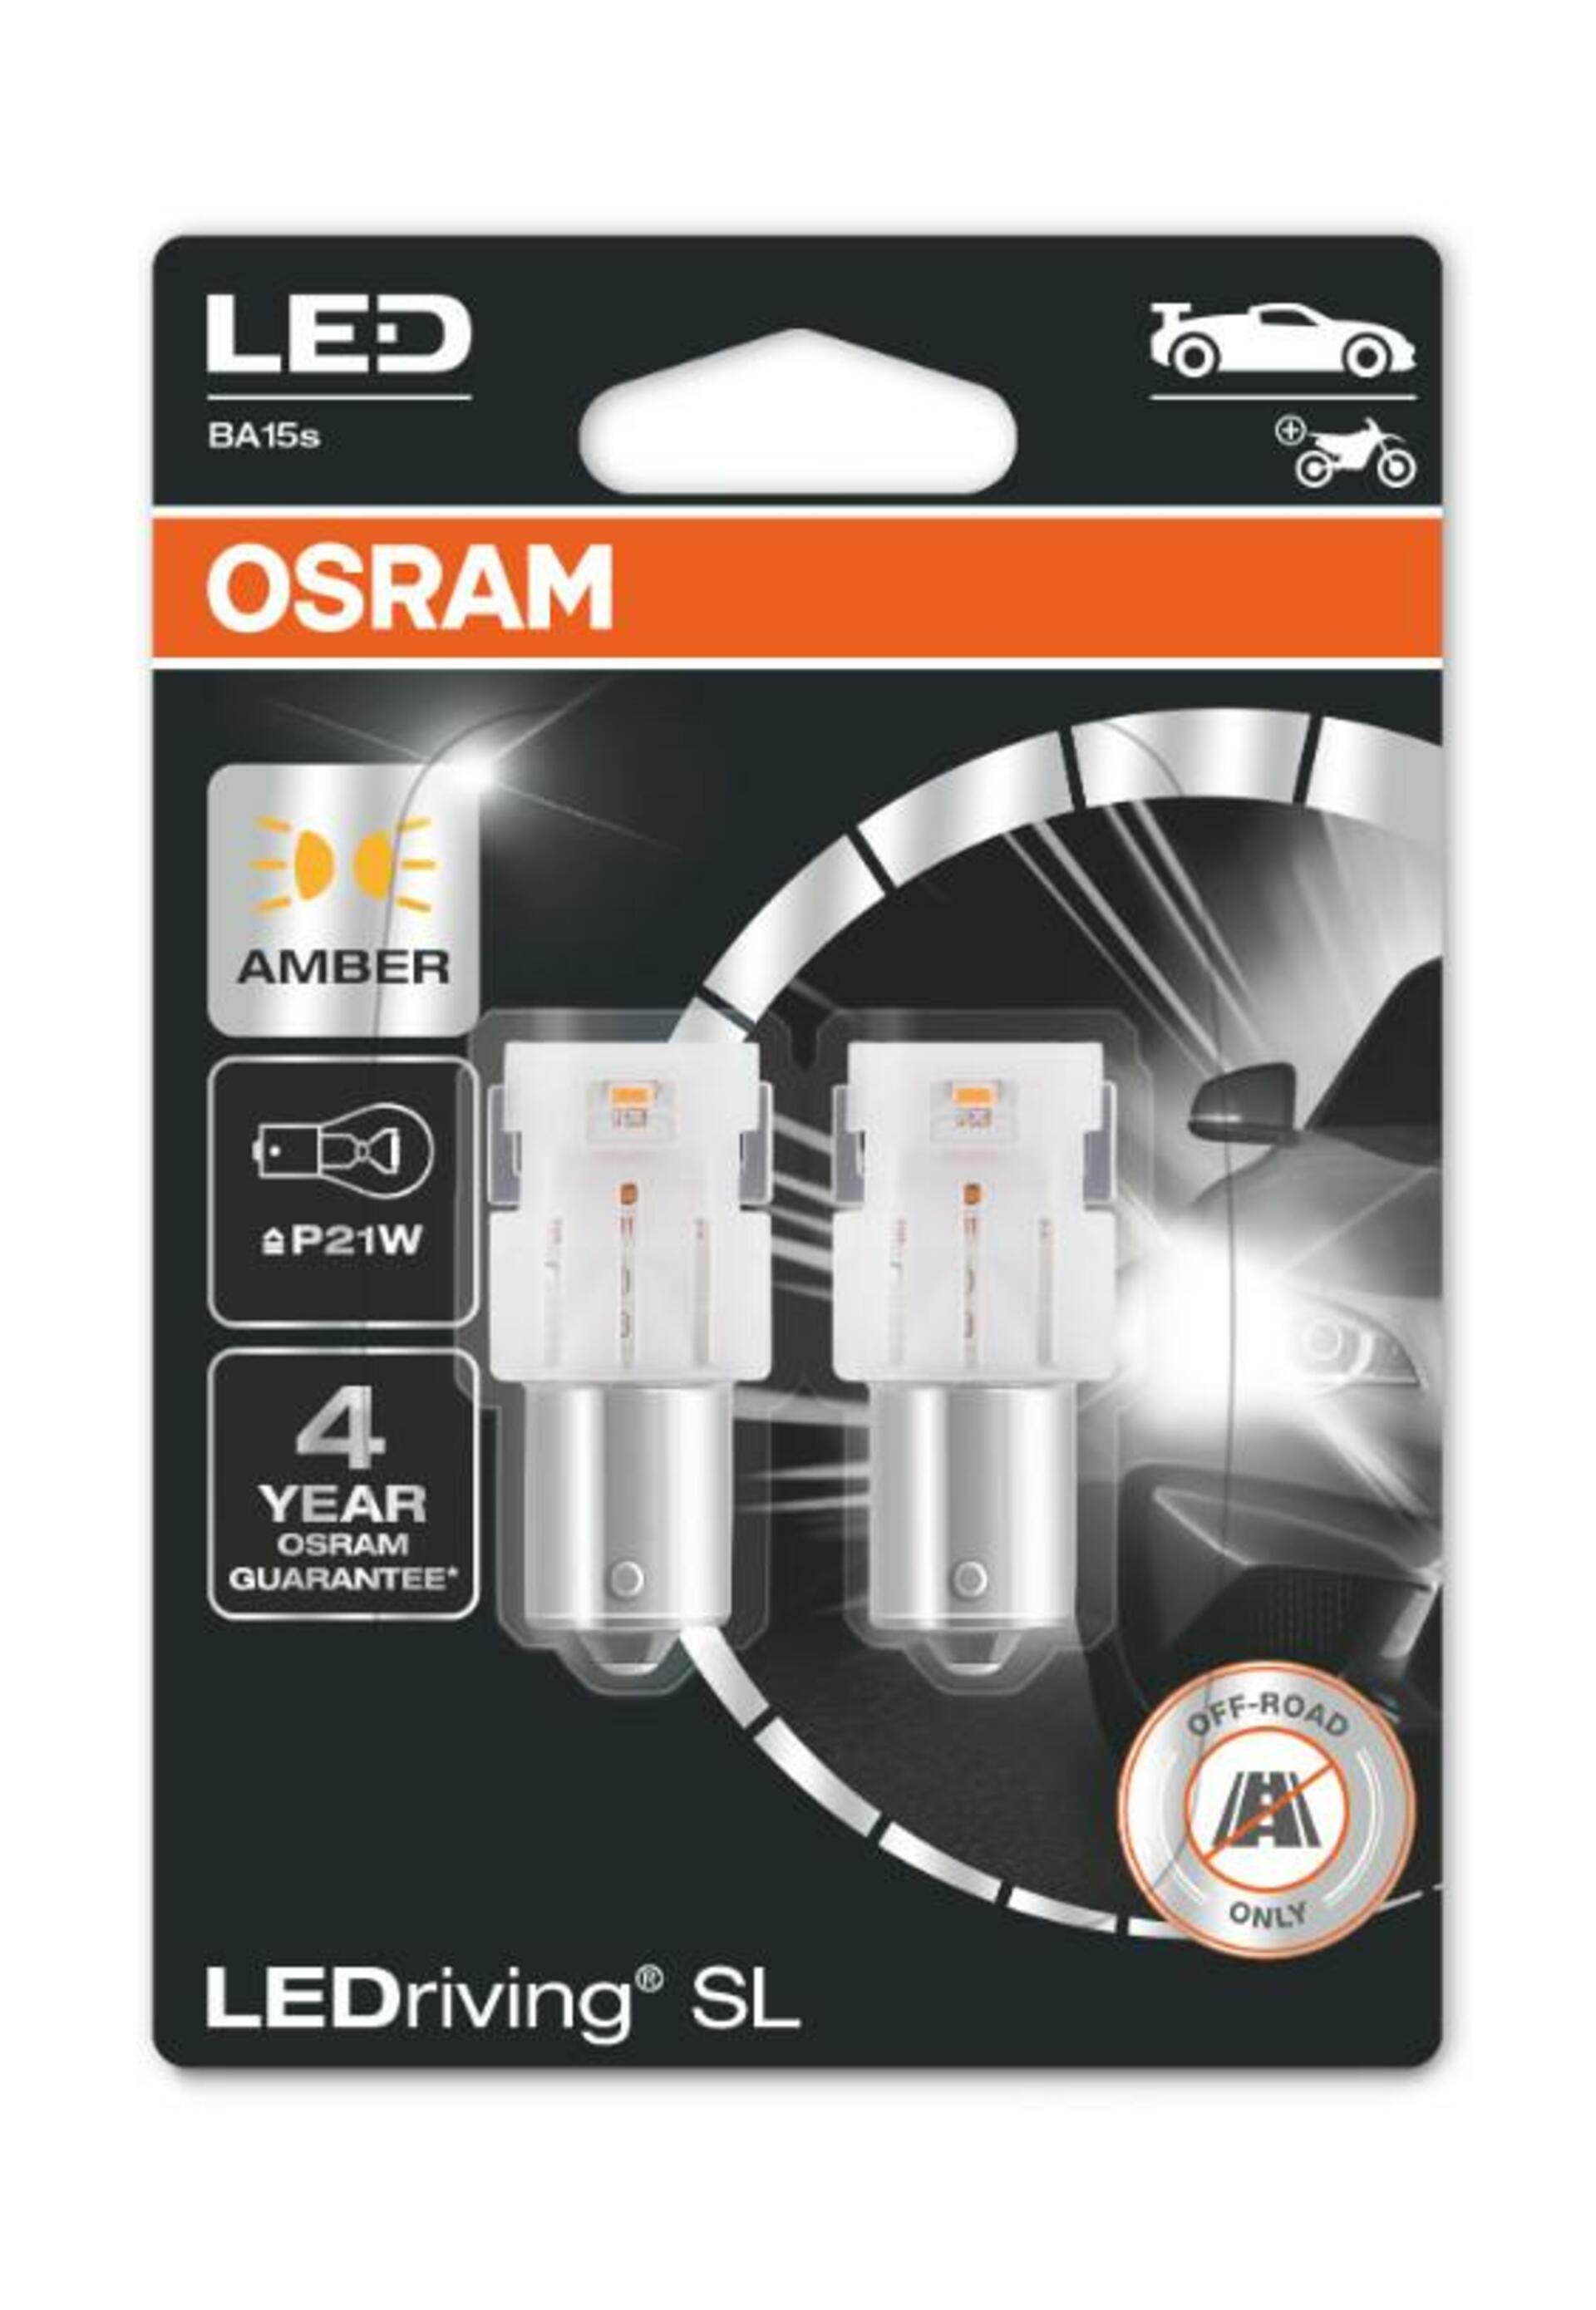 OSRAM LED P21W 7506DYP-02B AMBER 12V 2W BA15s 